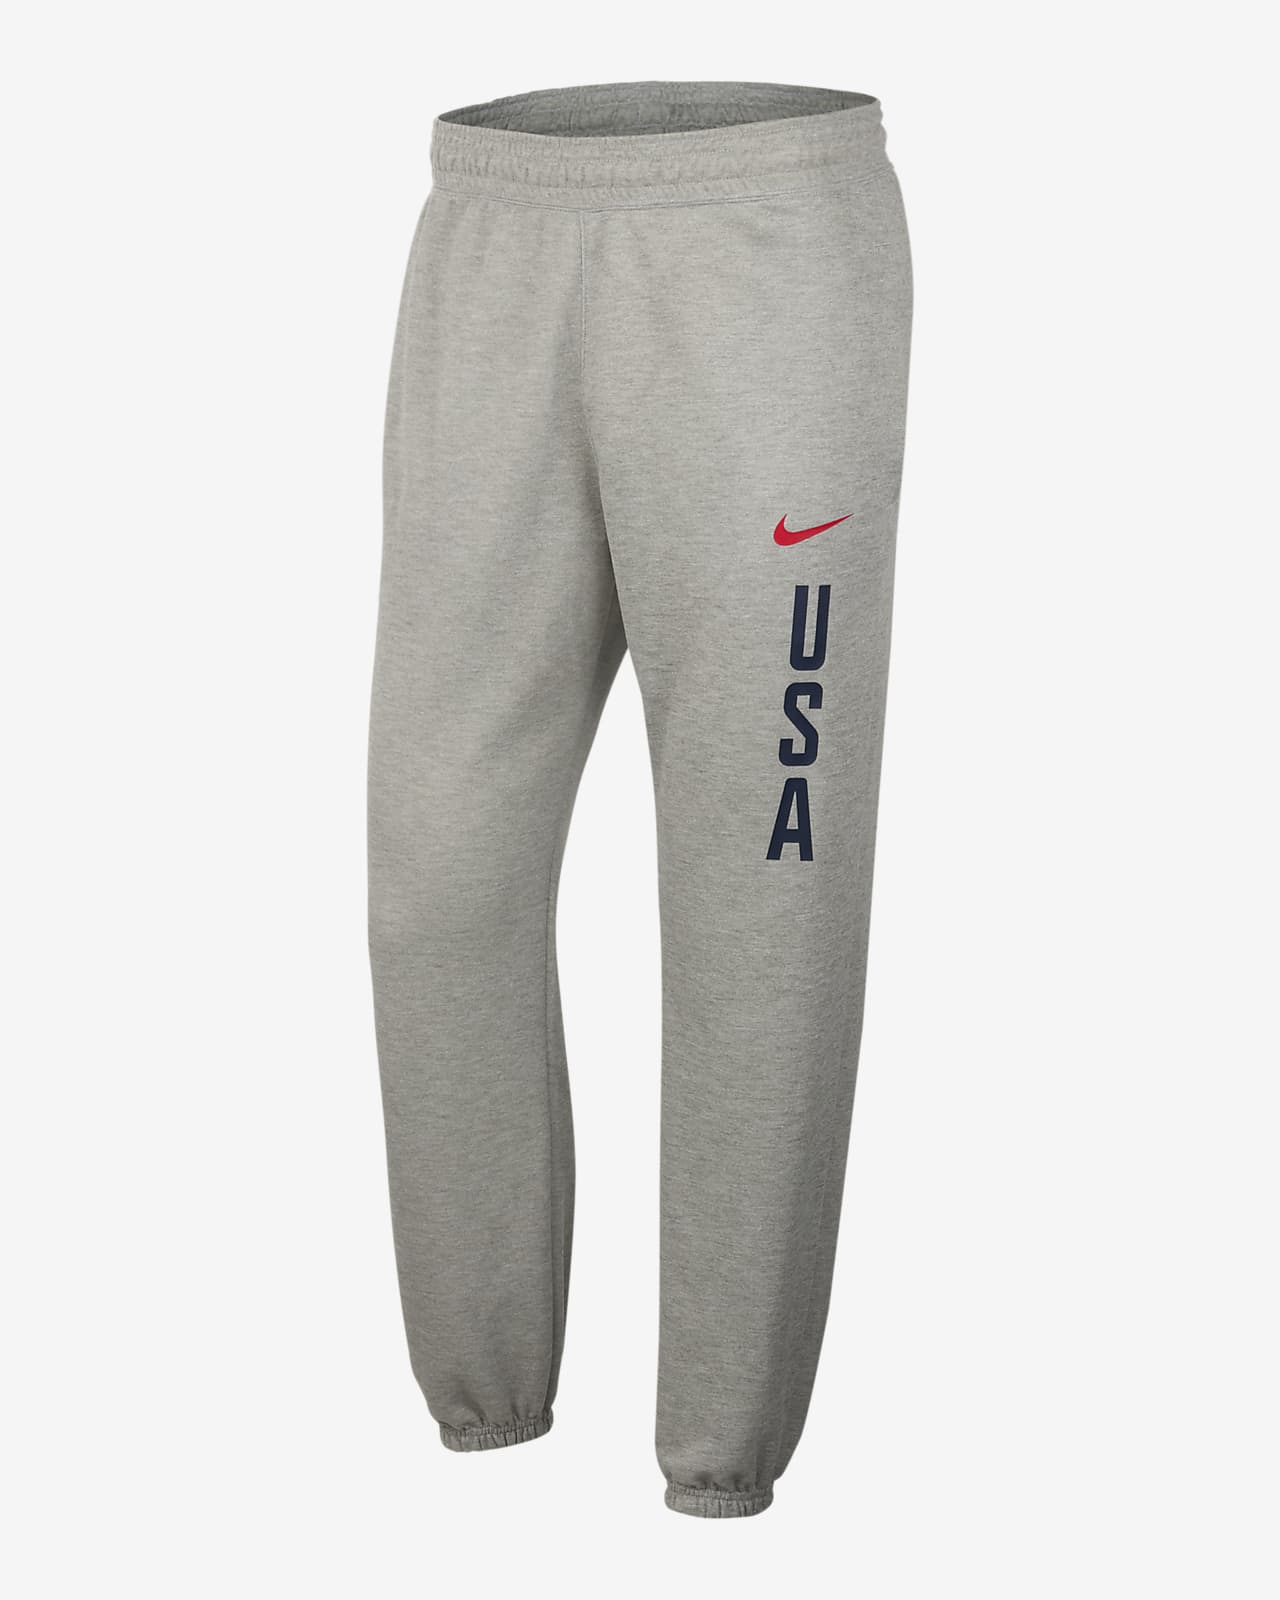 USA Nike Basketball-Fleece-Hose für das Training (Herren)